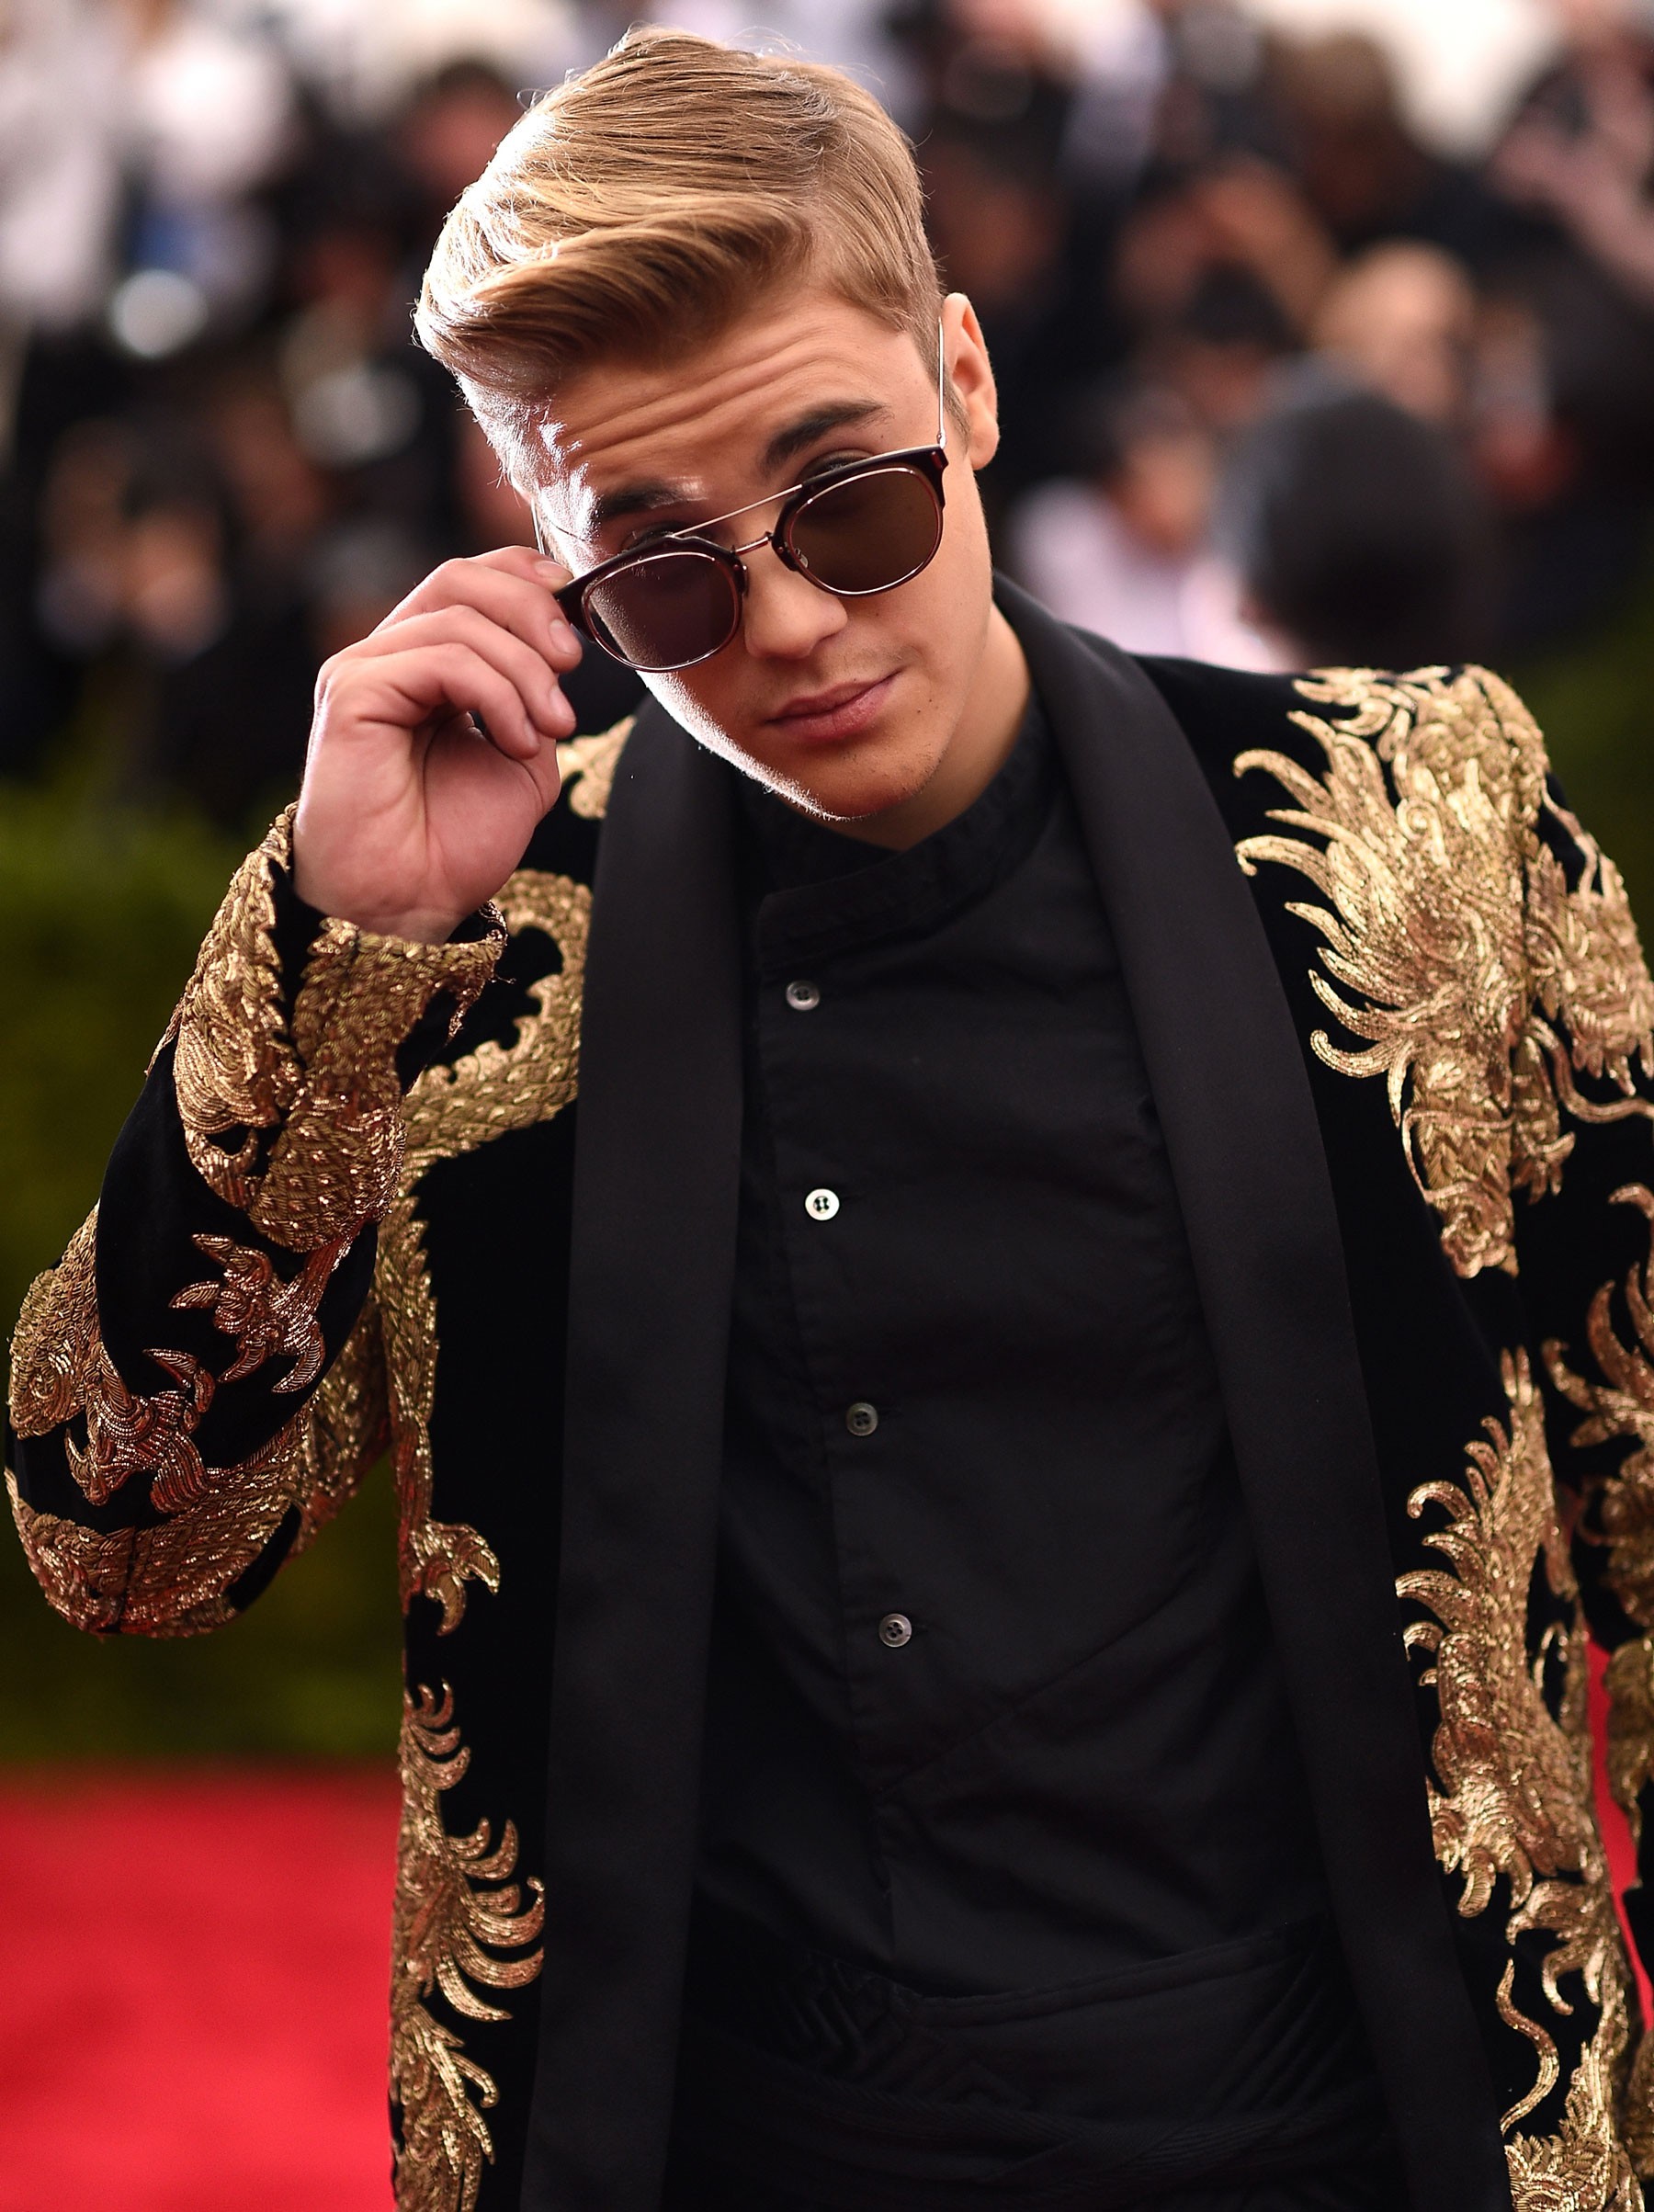 Justin Bieber - 36,994,254 seguidores (Foto: Getty Images)